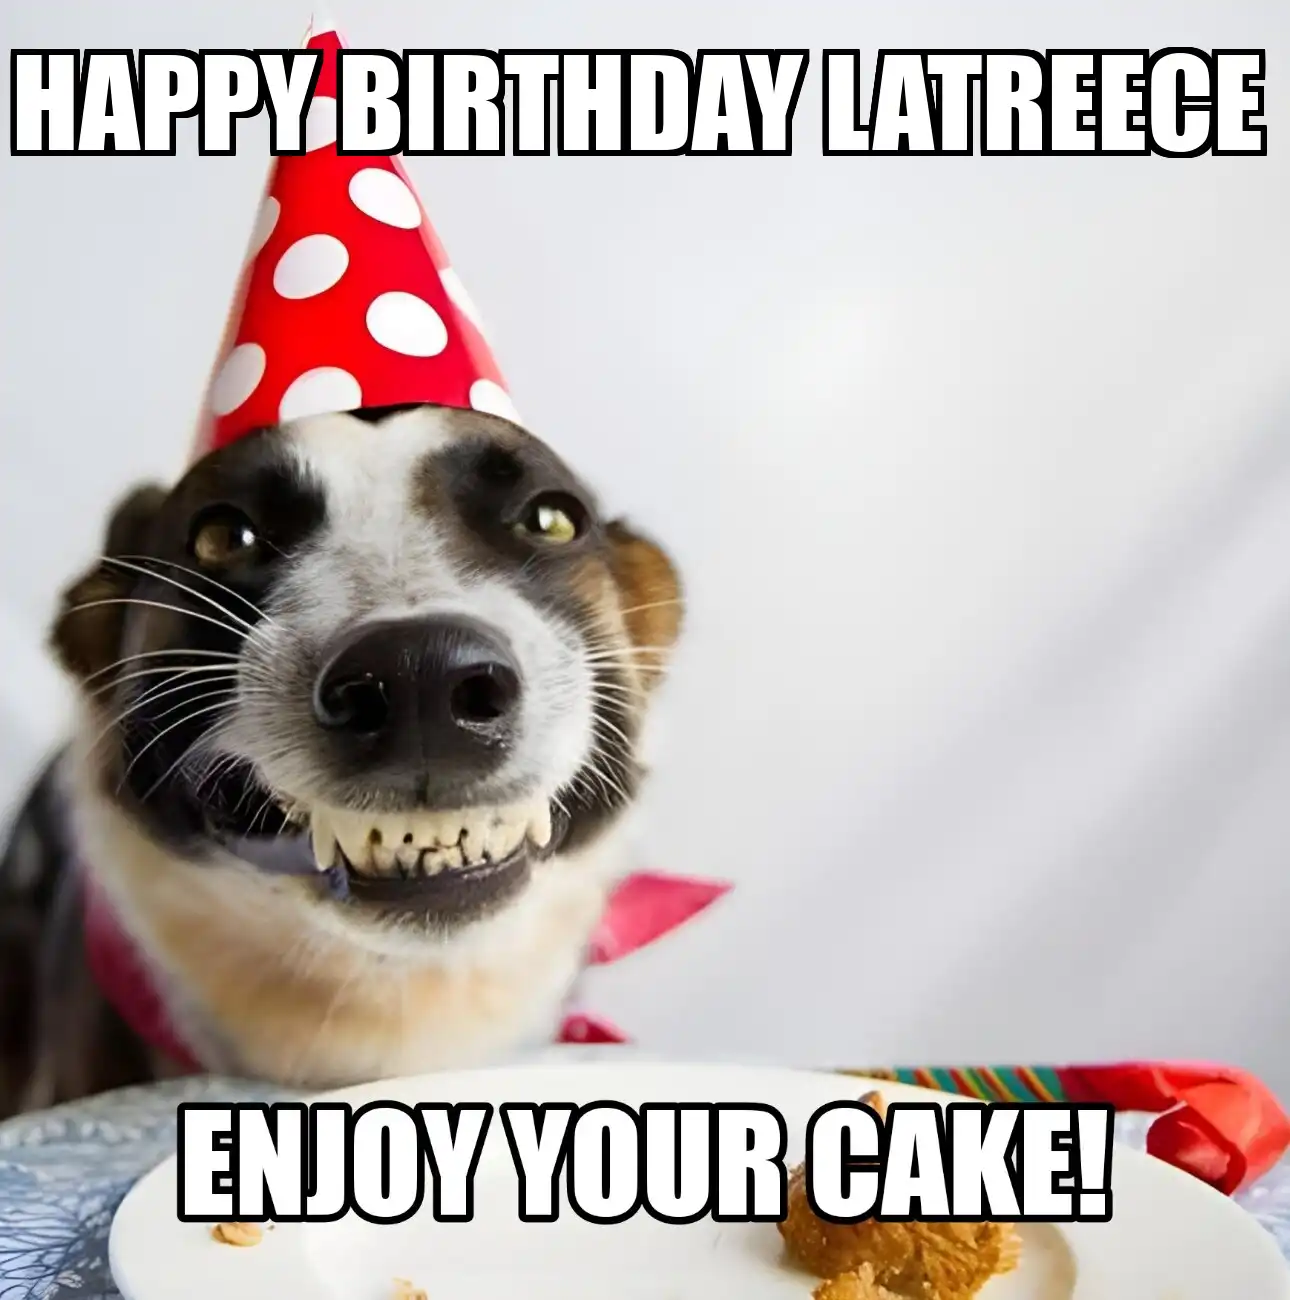 Happy Birthday Latreece Enjoy Your Cake Dog Meme